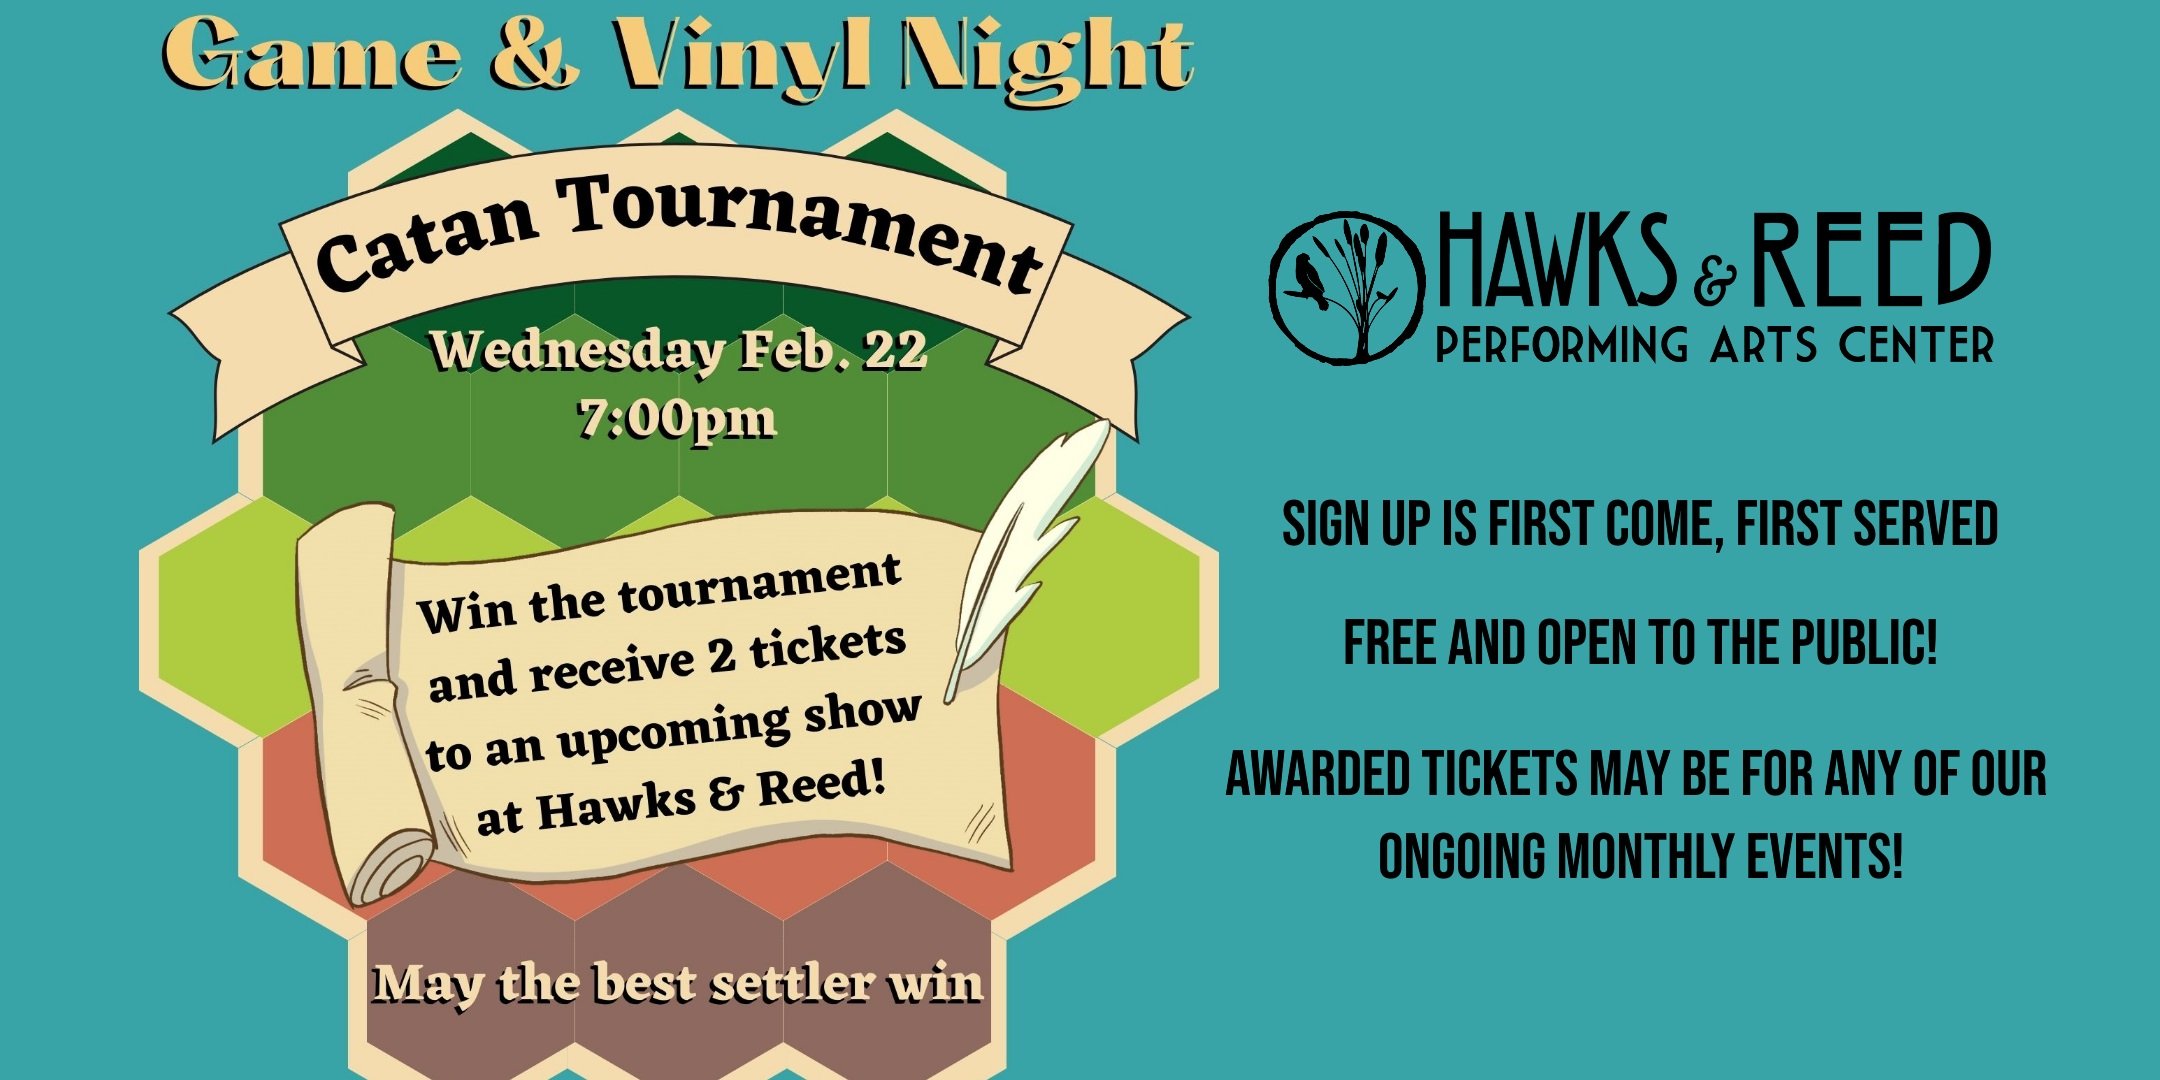 Game & Vinyl Night: Catan Tournament at Hawks & Reed